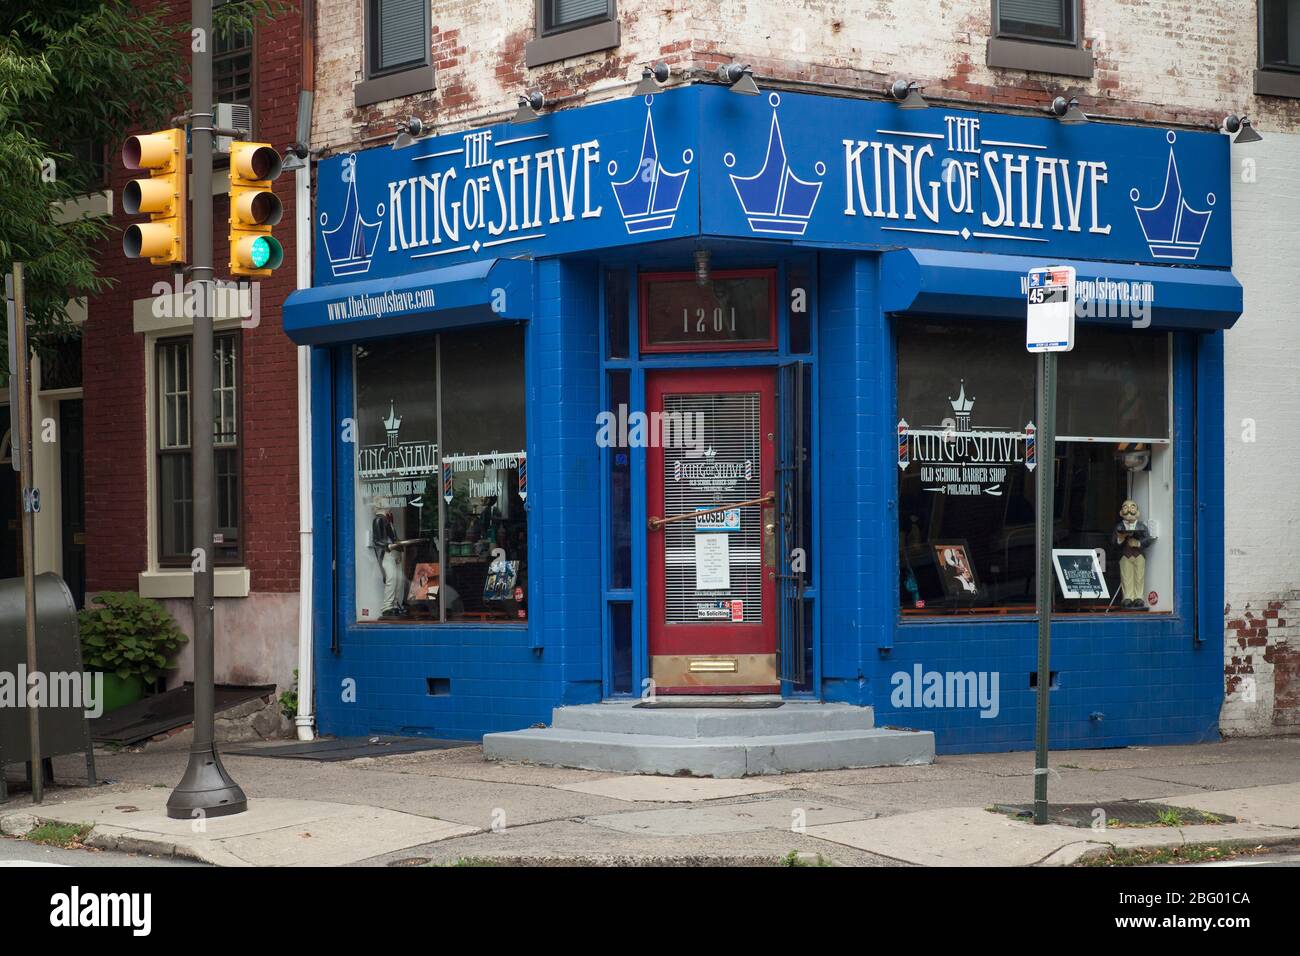 Horizontal view of the King of Shave barbershop façade at Pine St, Philadelphia, Pennsylvania Stock Photo